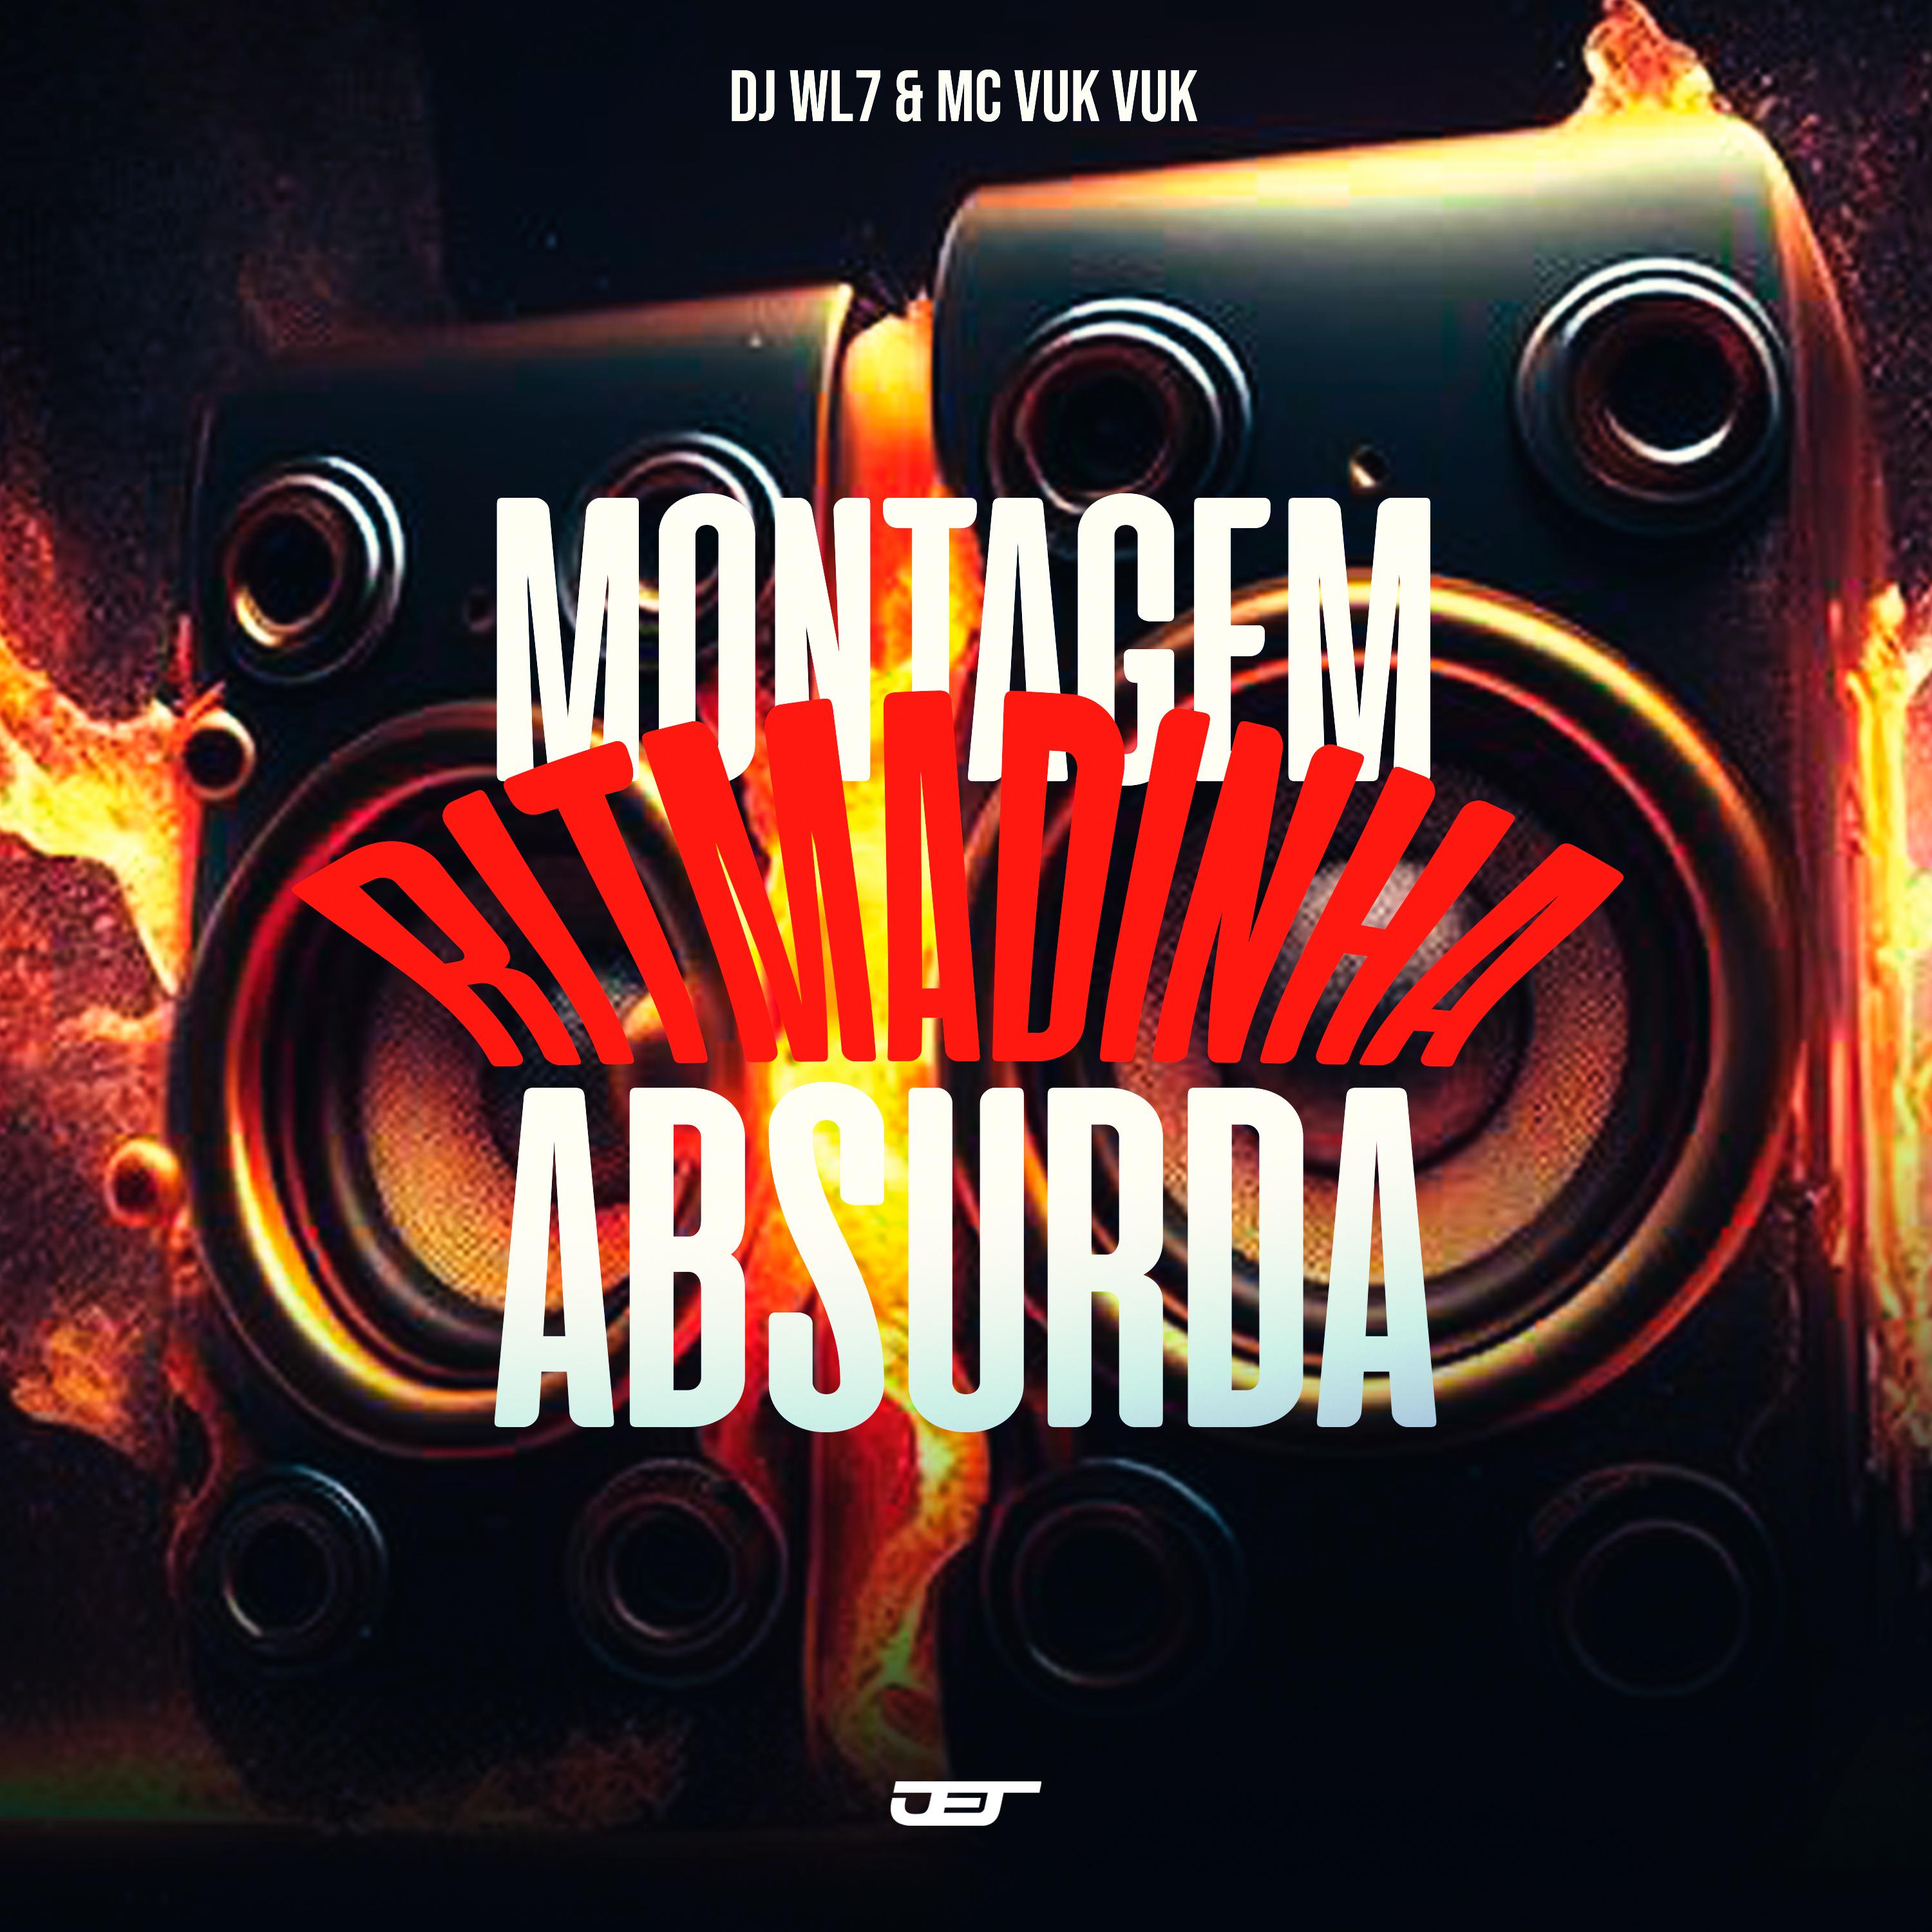 Постер альбома Montagem Ritmadinha Absurda